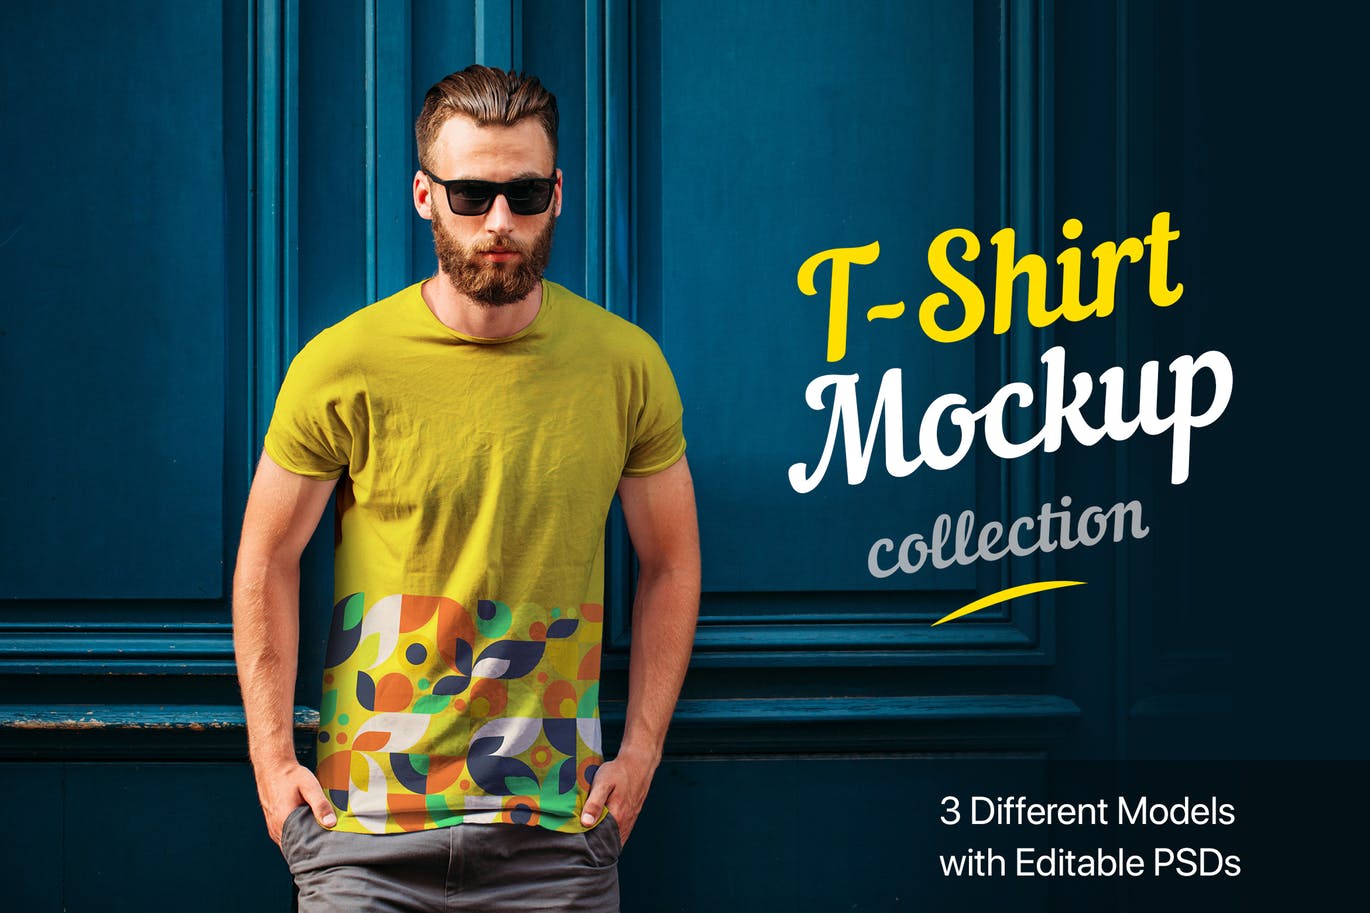 高档男士圆领T恤印花设计模特上身效果图样机 T-Shirt Mockup Collection 02插图